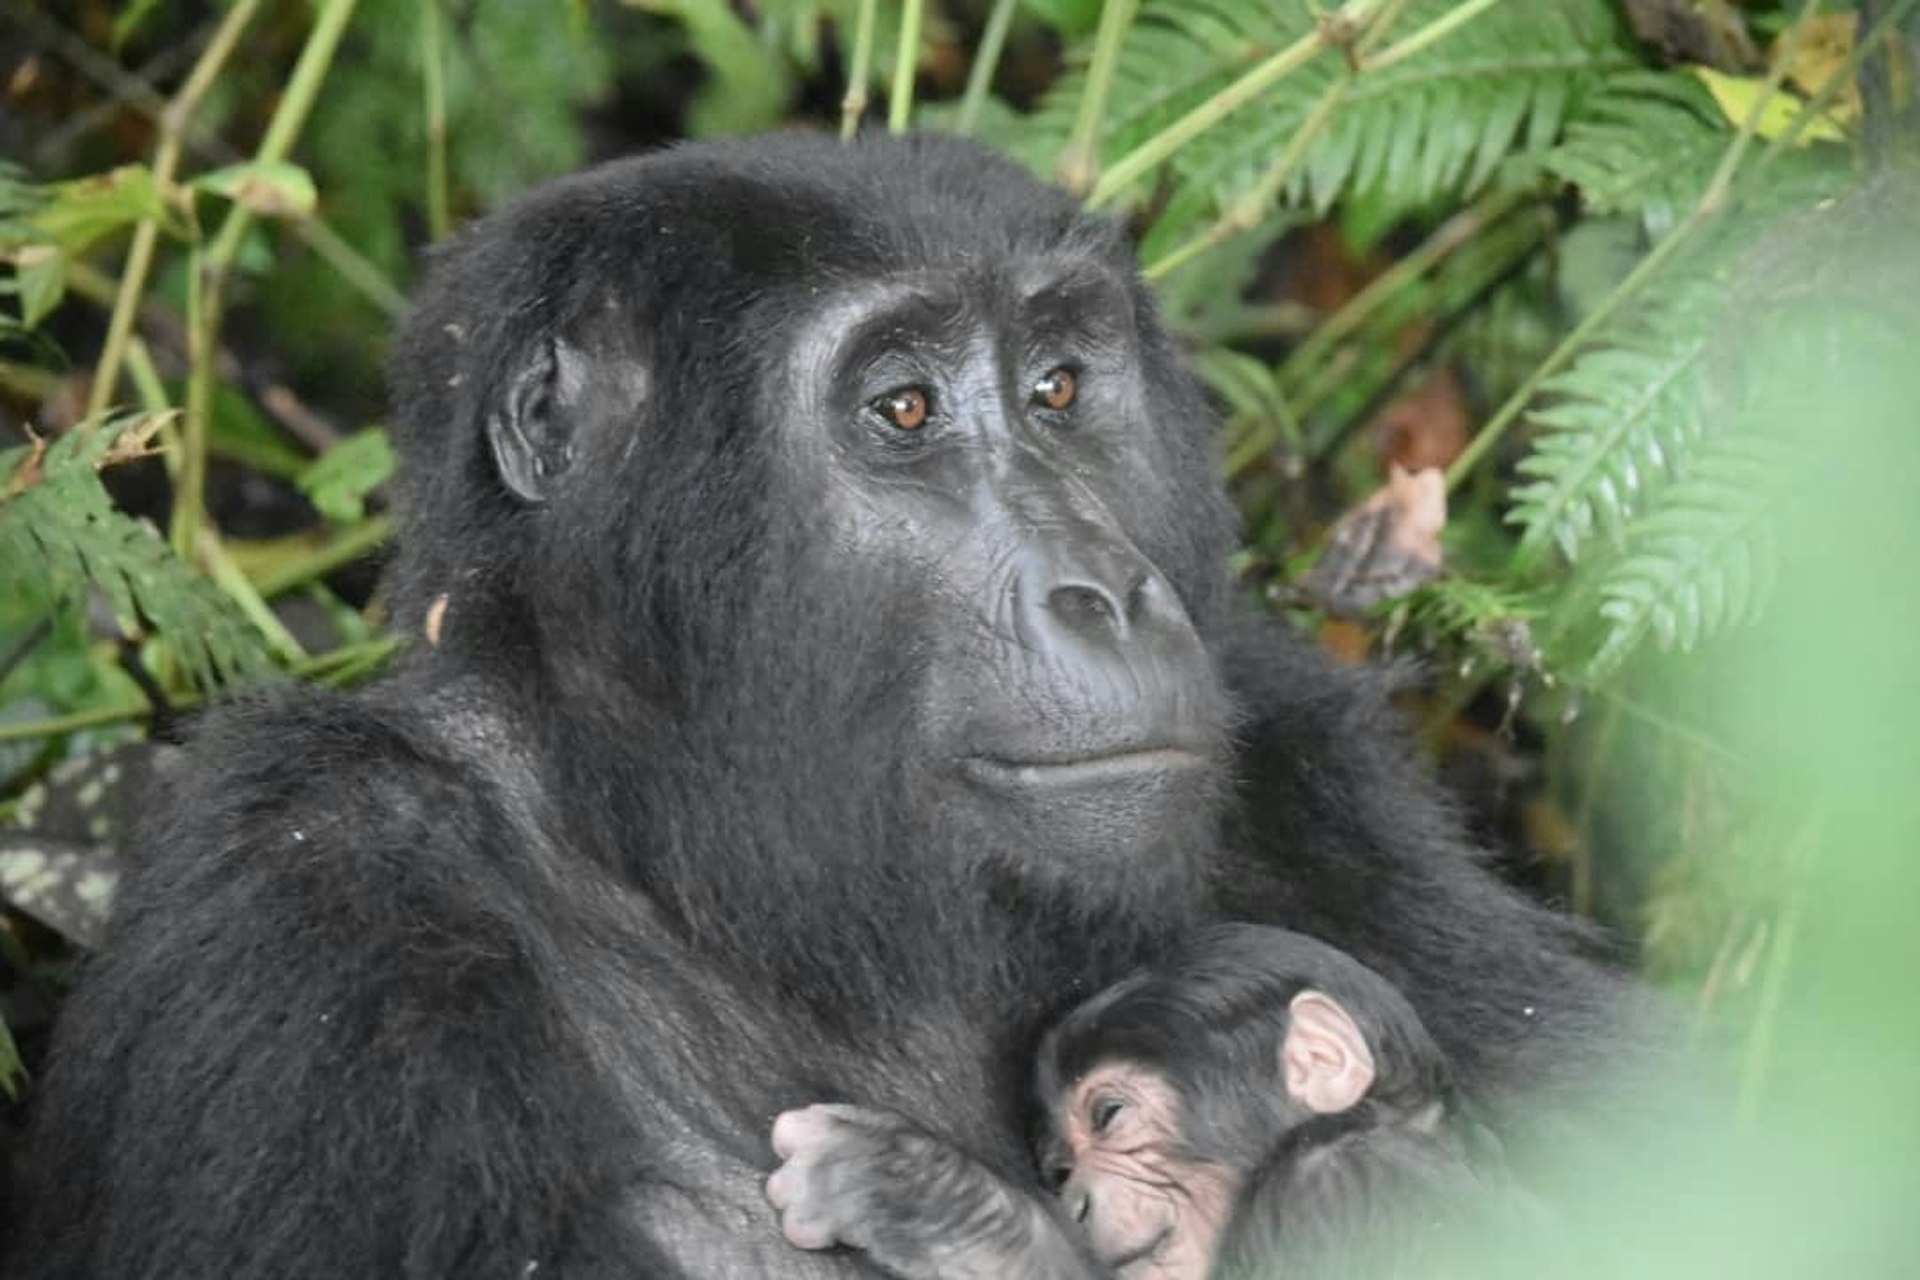 A femle gorilla holding a baby in Uganda